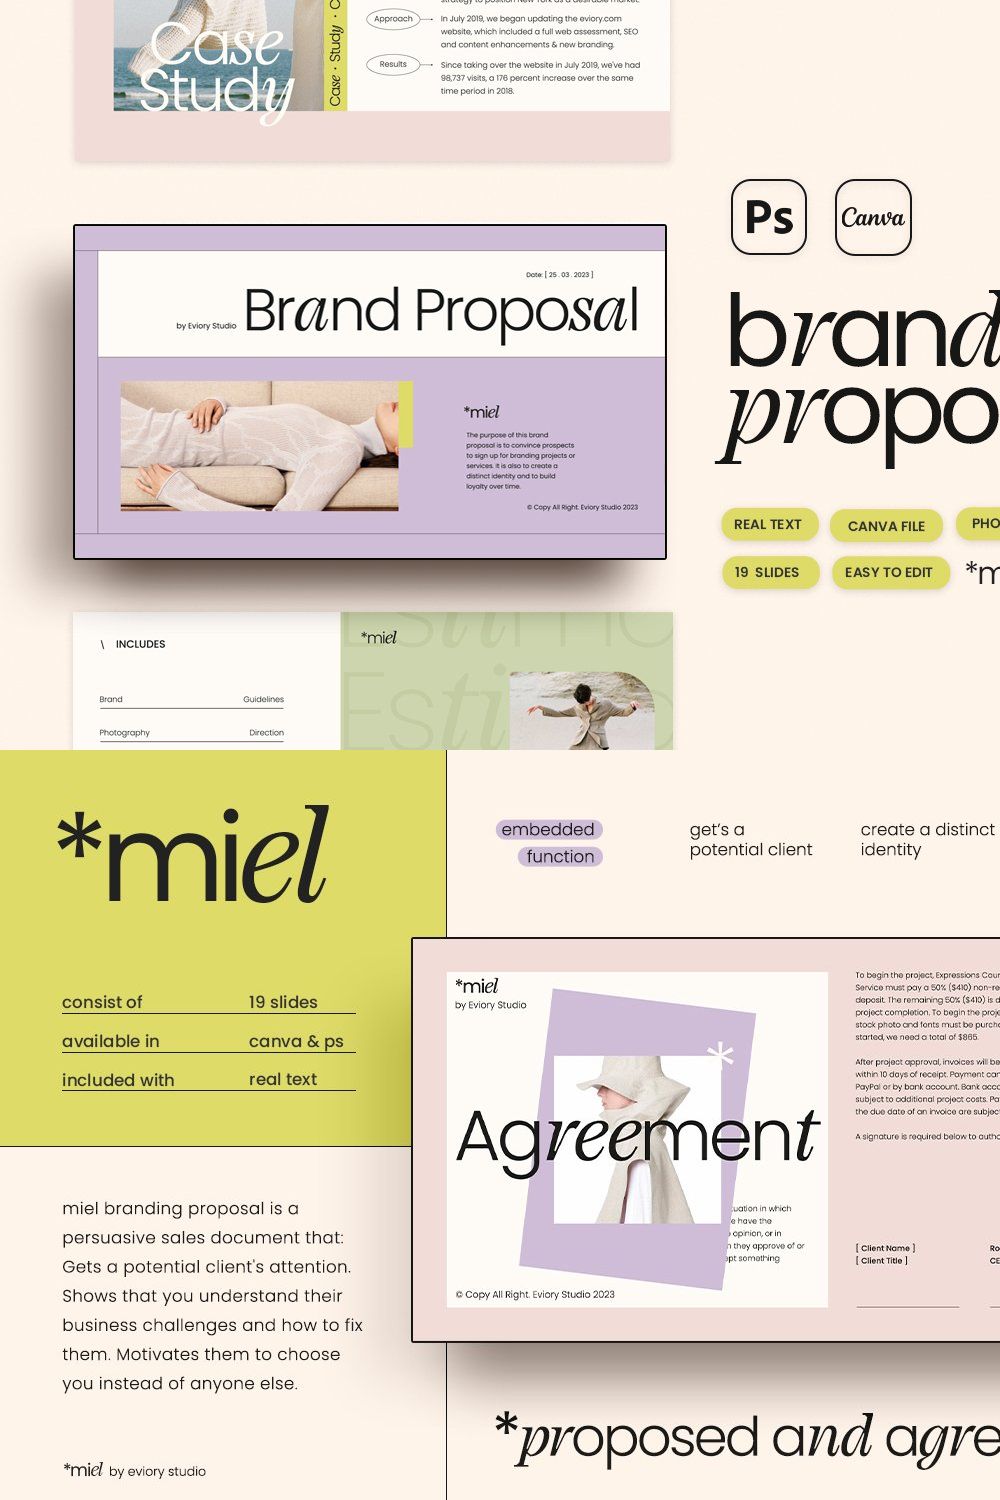 MIEL / Brand Proposal pinterest preview image.